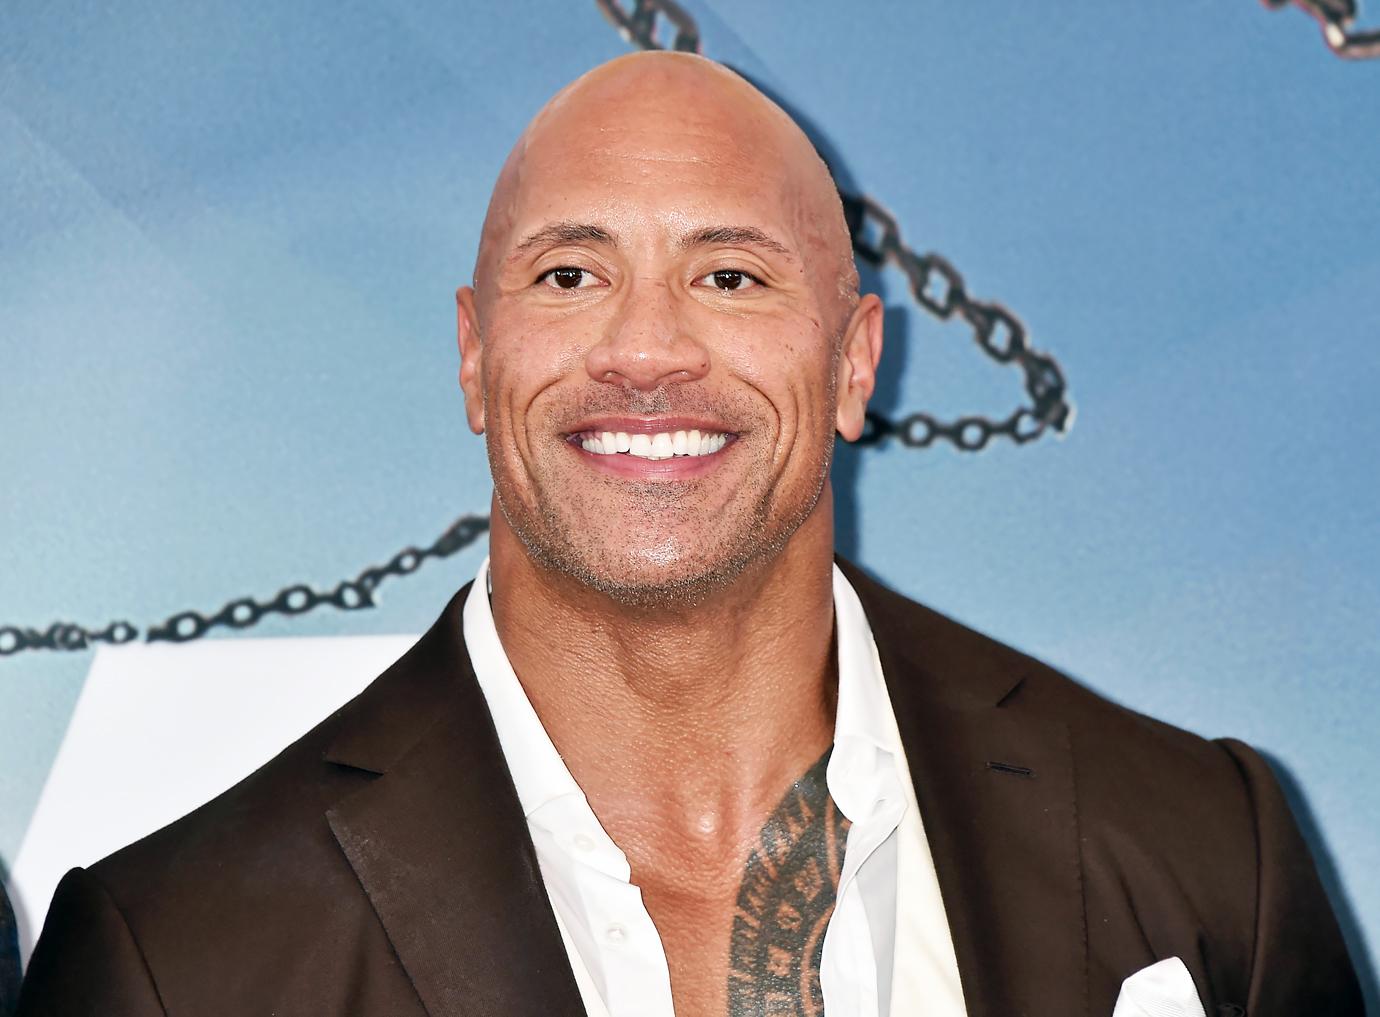 Dwayne Johnson claims Vin Diesel tried using 'manipulation' to get